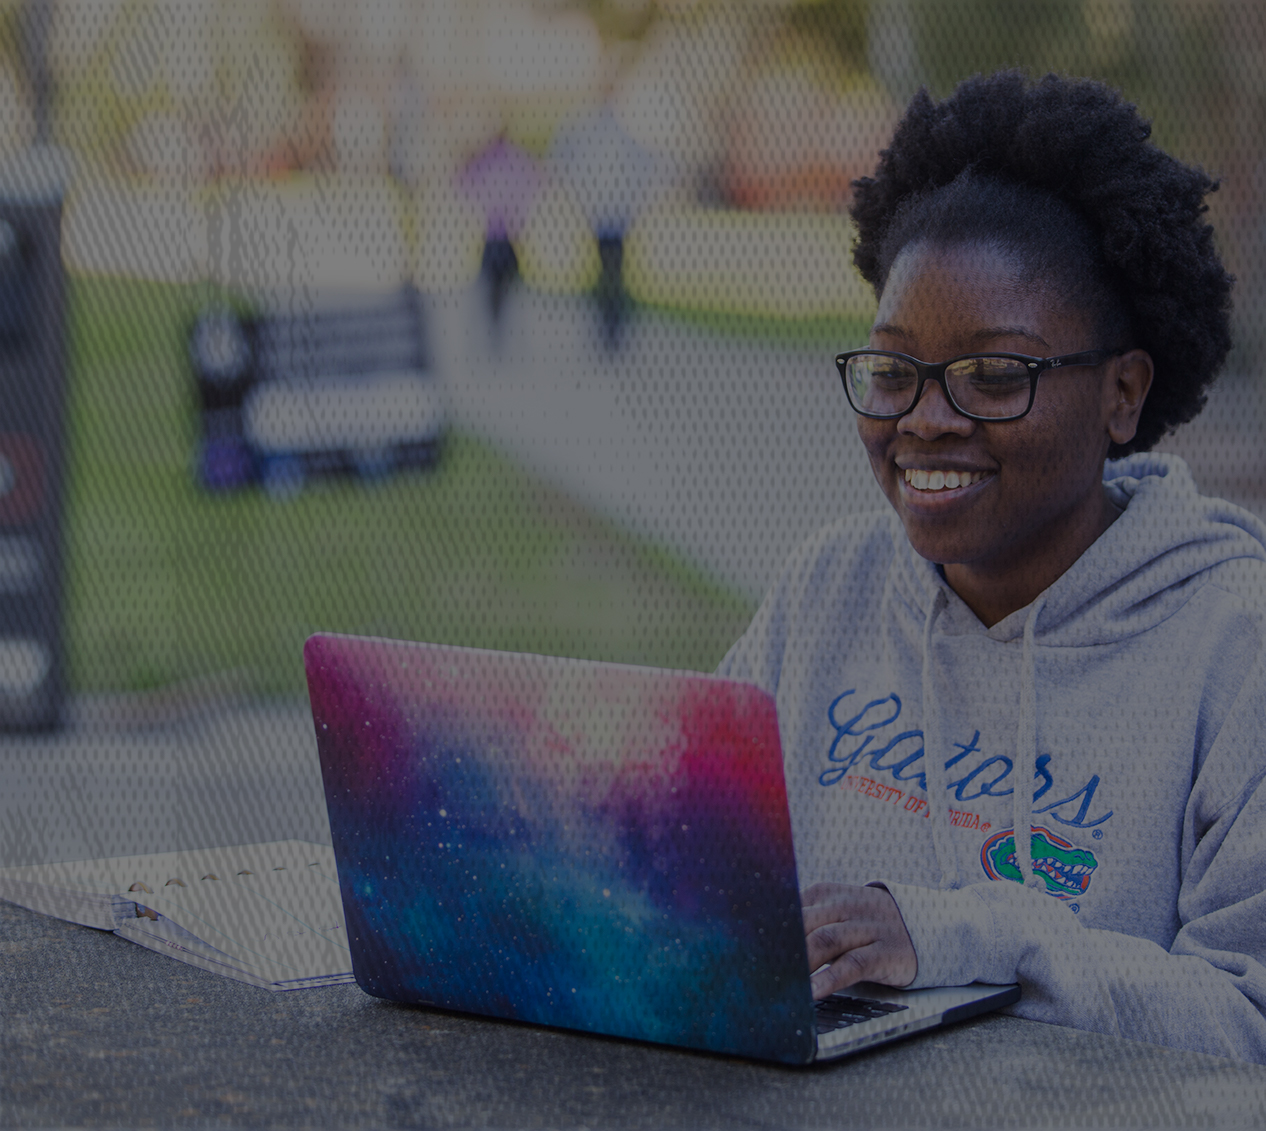 Cals远程教育学生坐在长凳上，她的五彩笔记本电脑。 